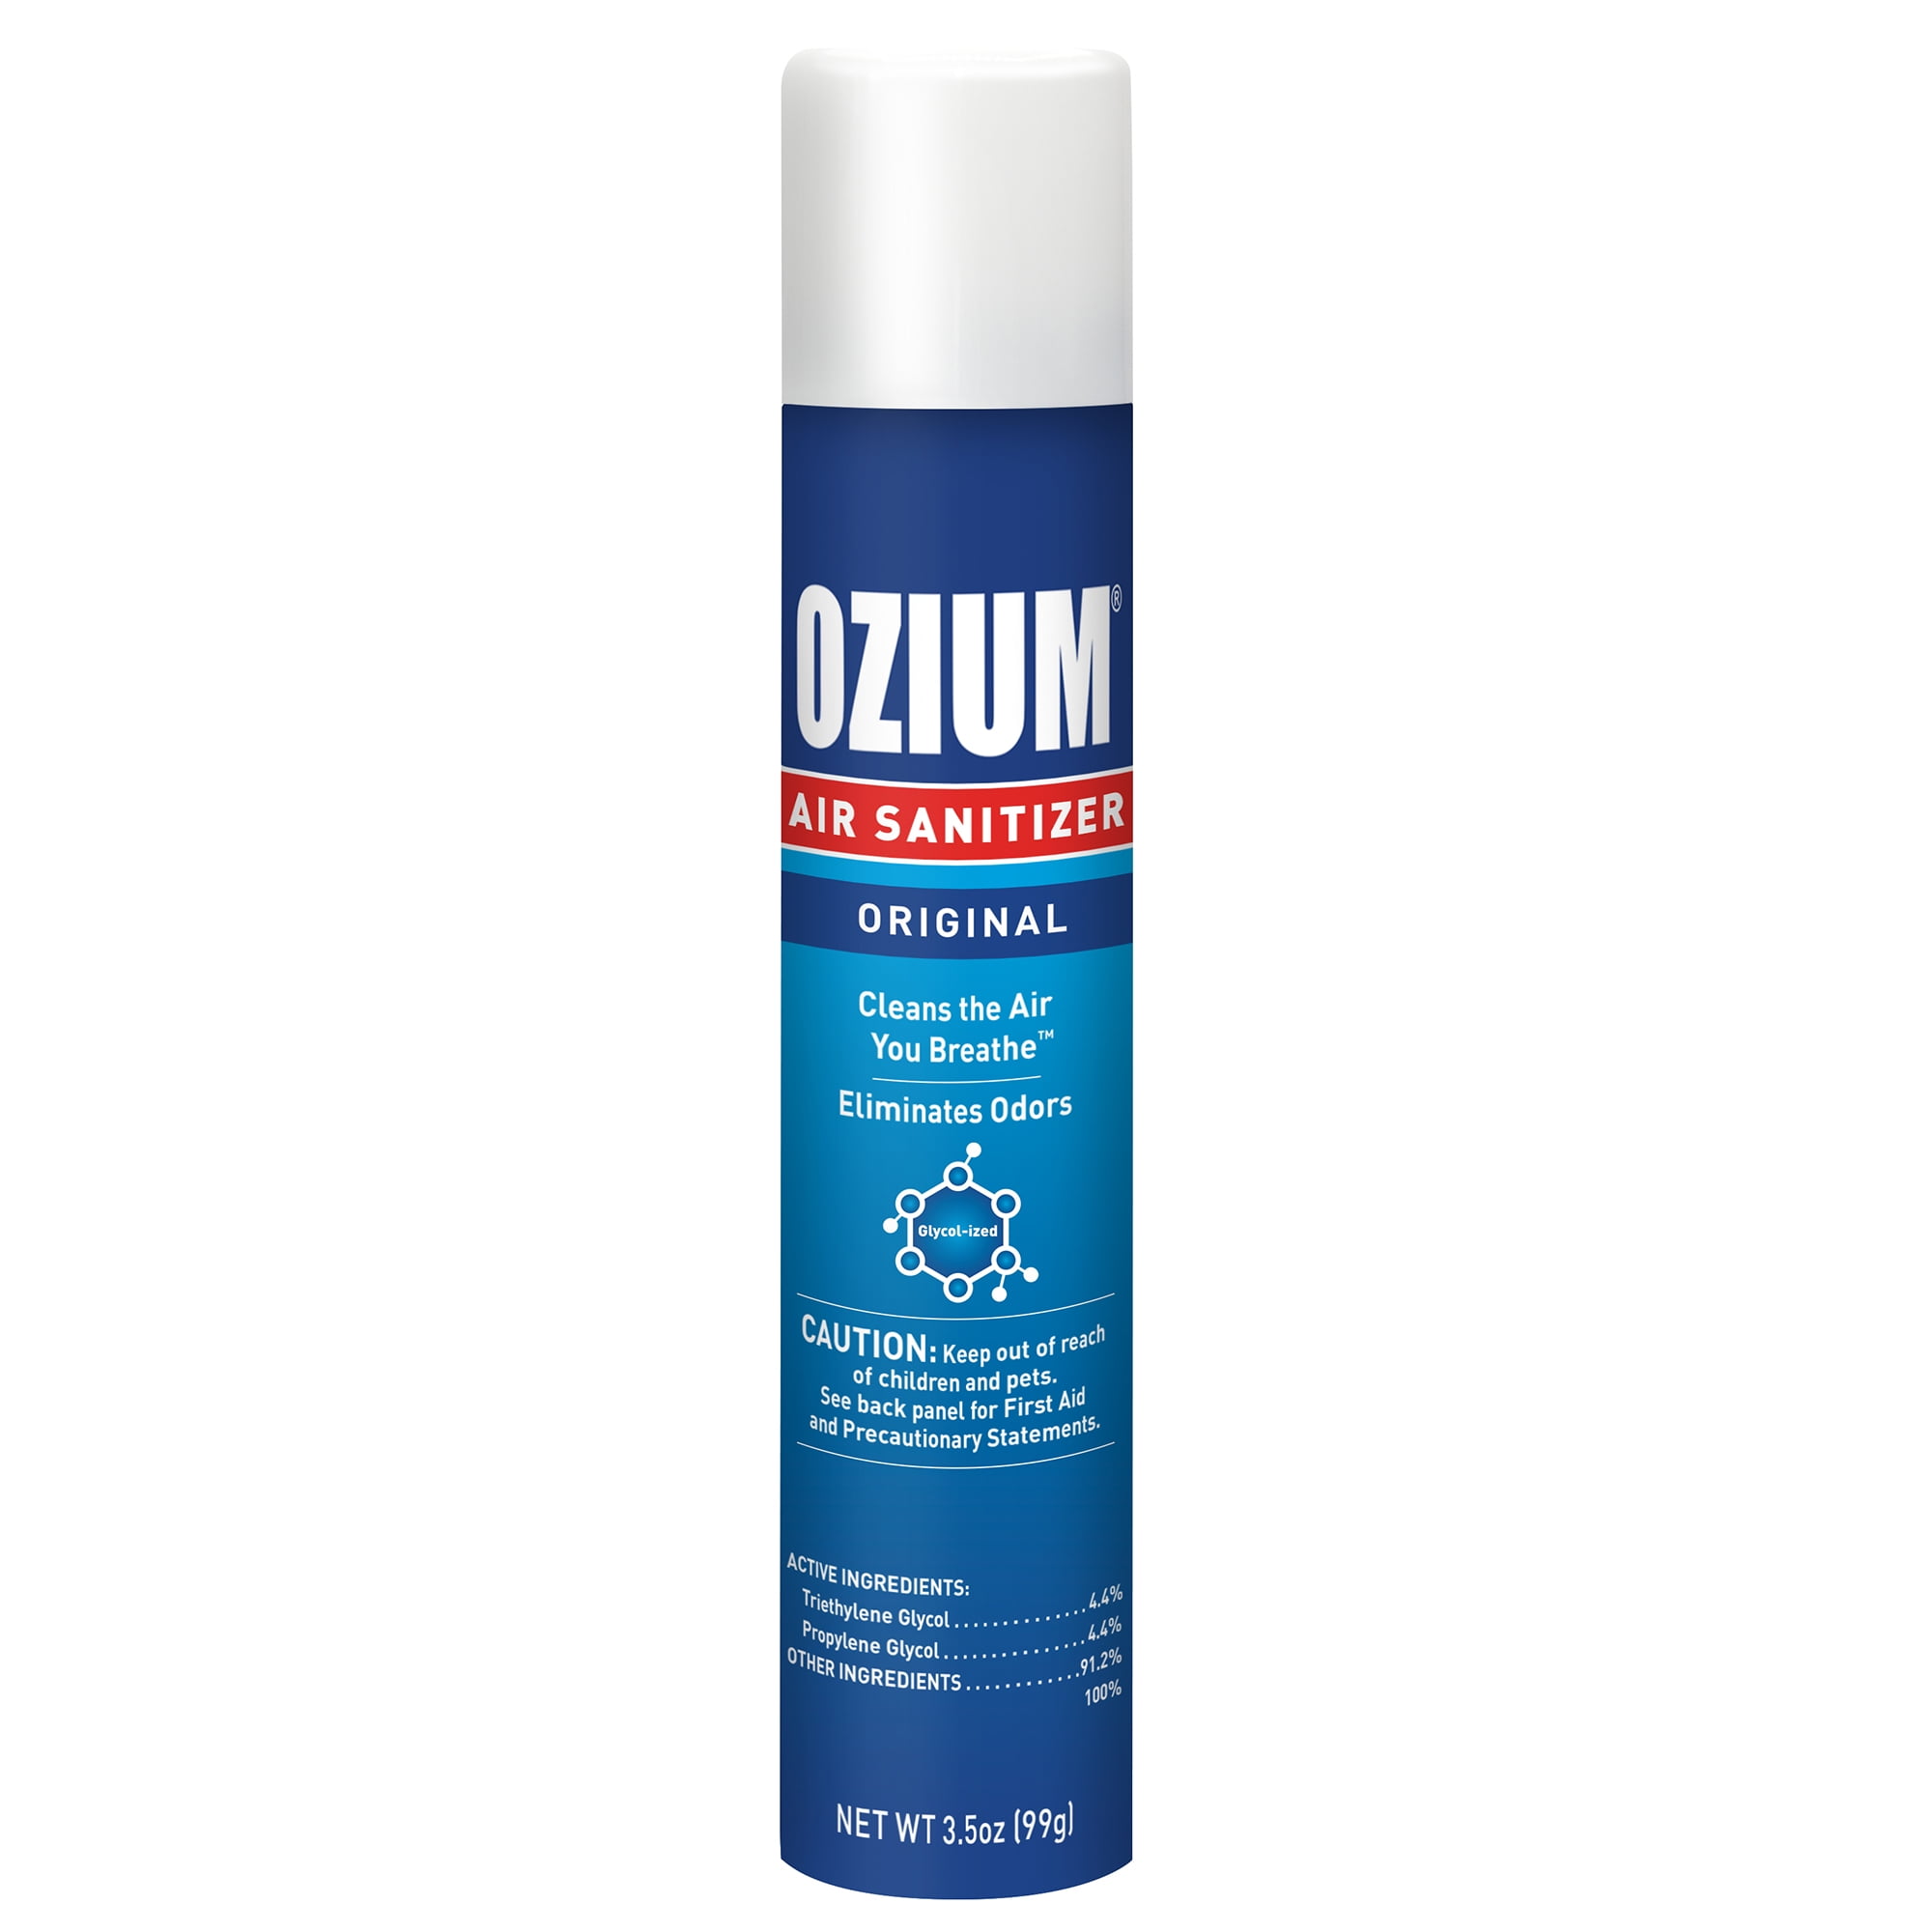 OZIUM Air Sanitizer Spray, 3.5oz, Original Fragrance